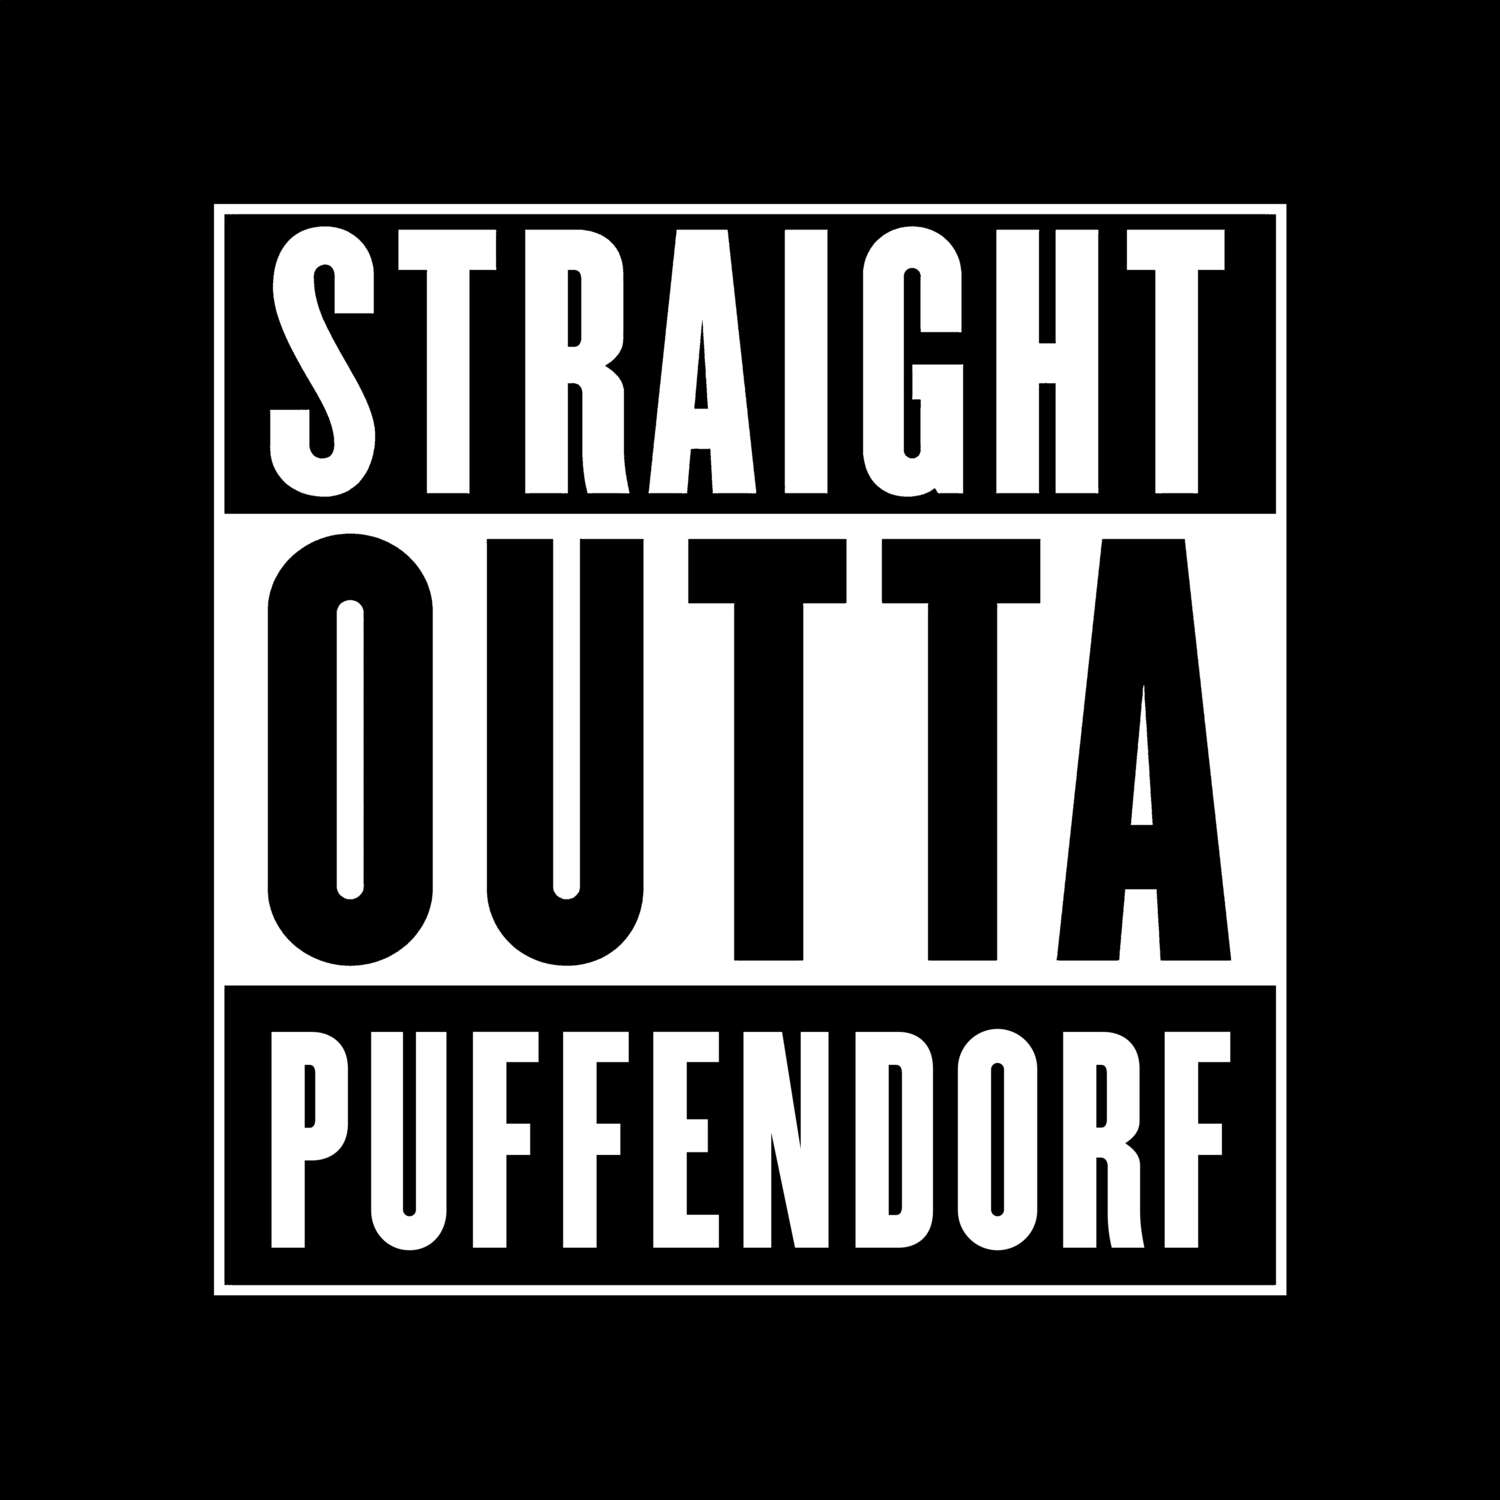 Puffendorf T-Shirt »Straight Outta«